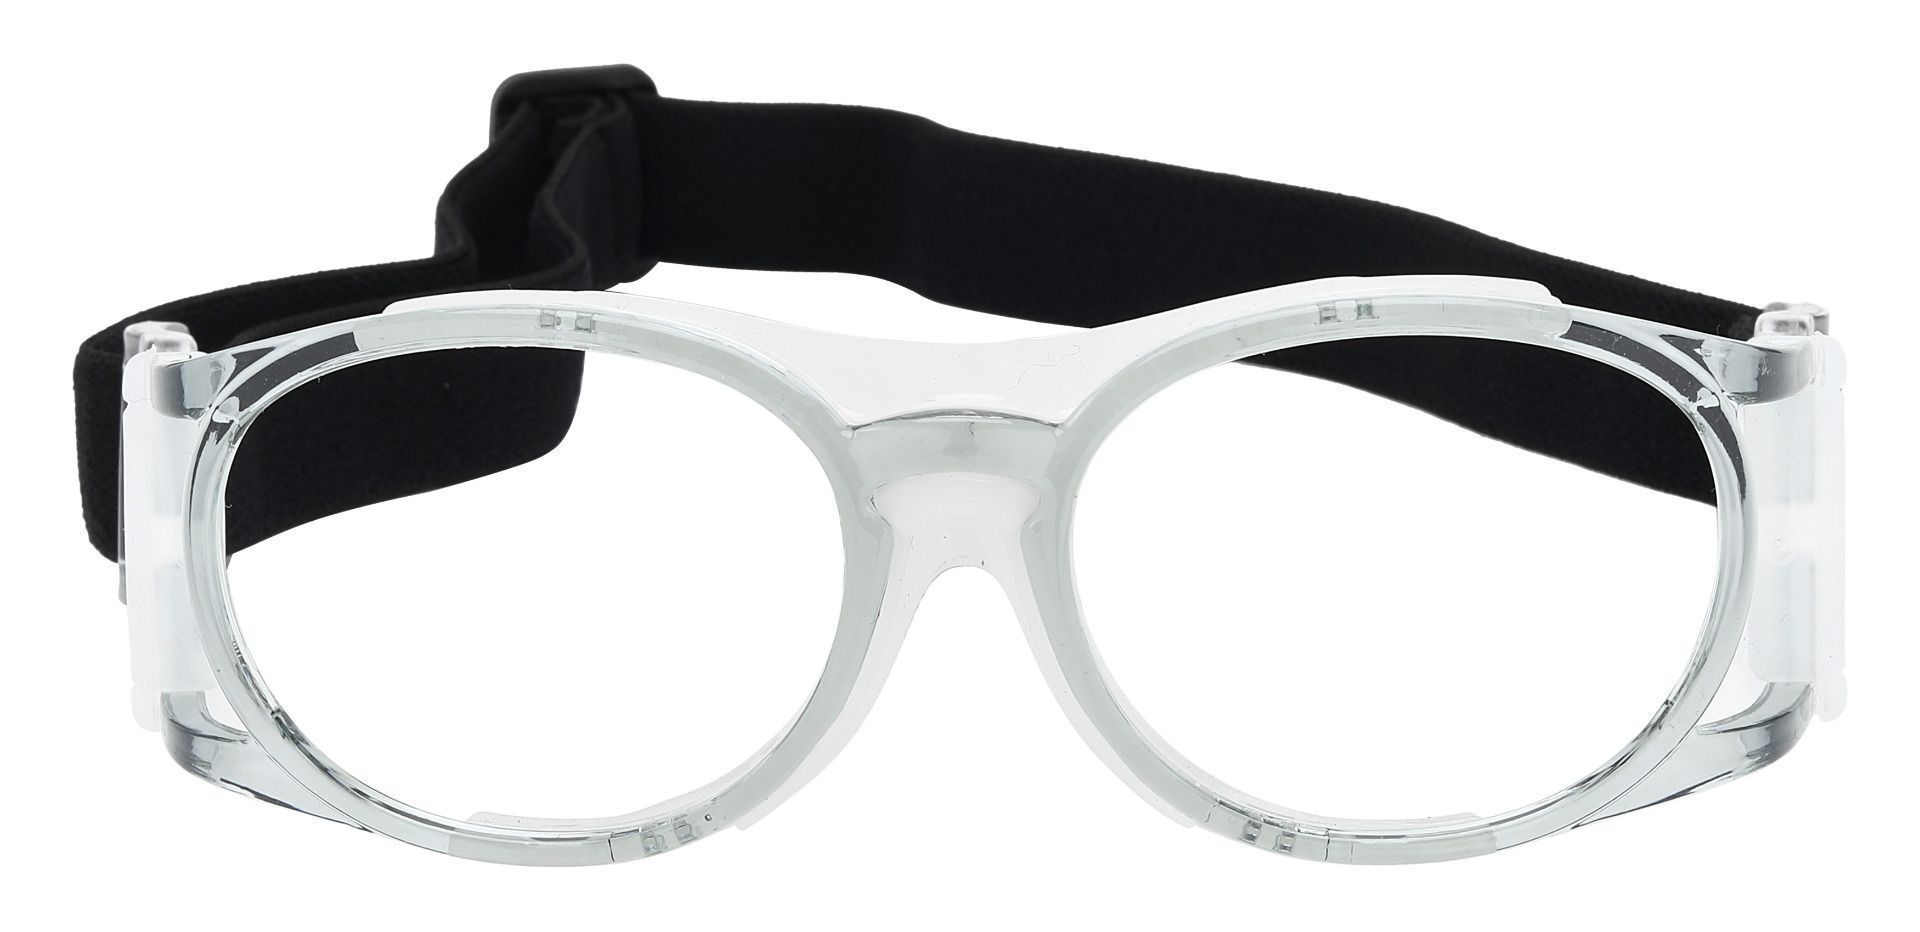 Joliet Sports Goggles Prescription Glasses - Gray